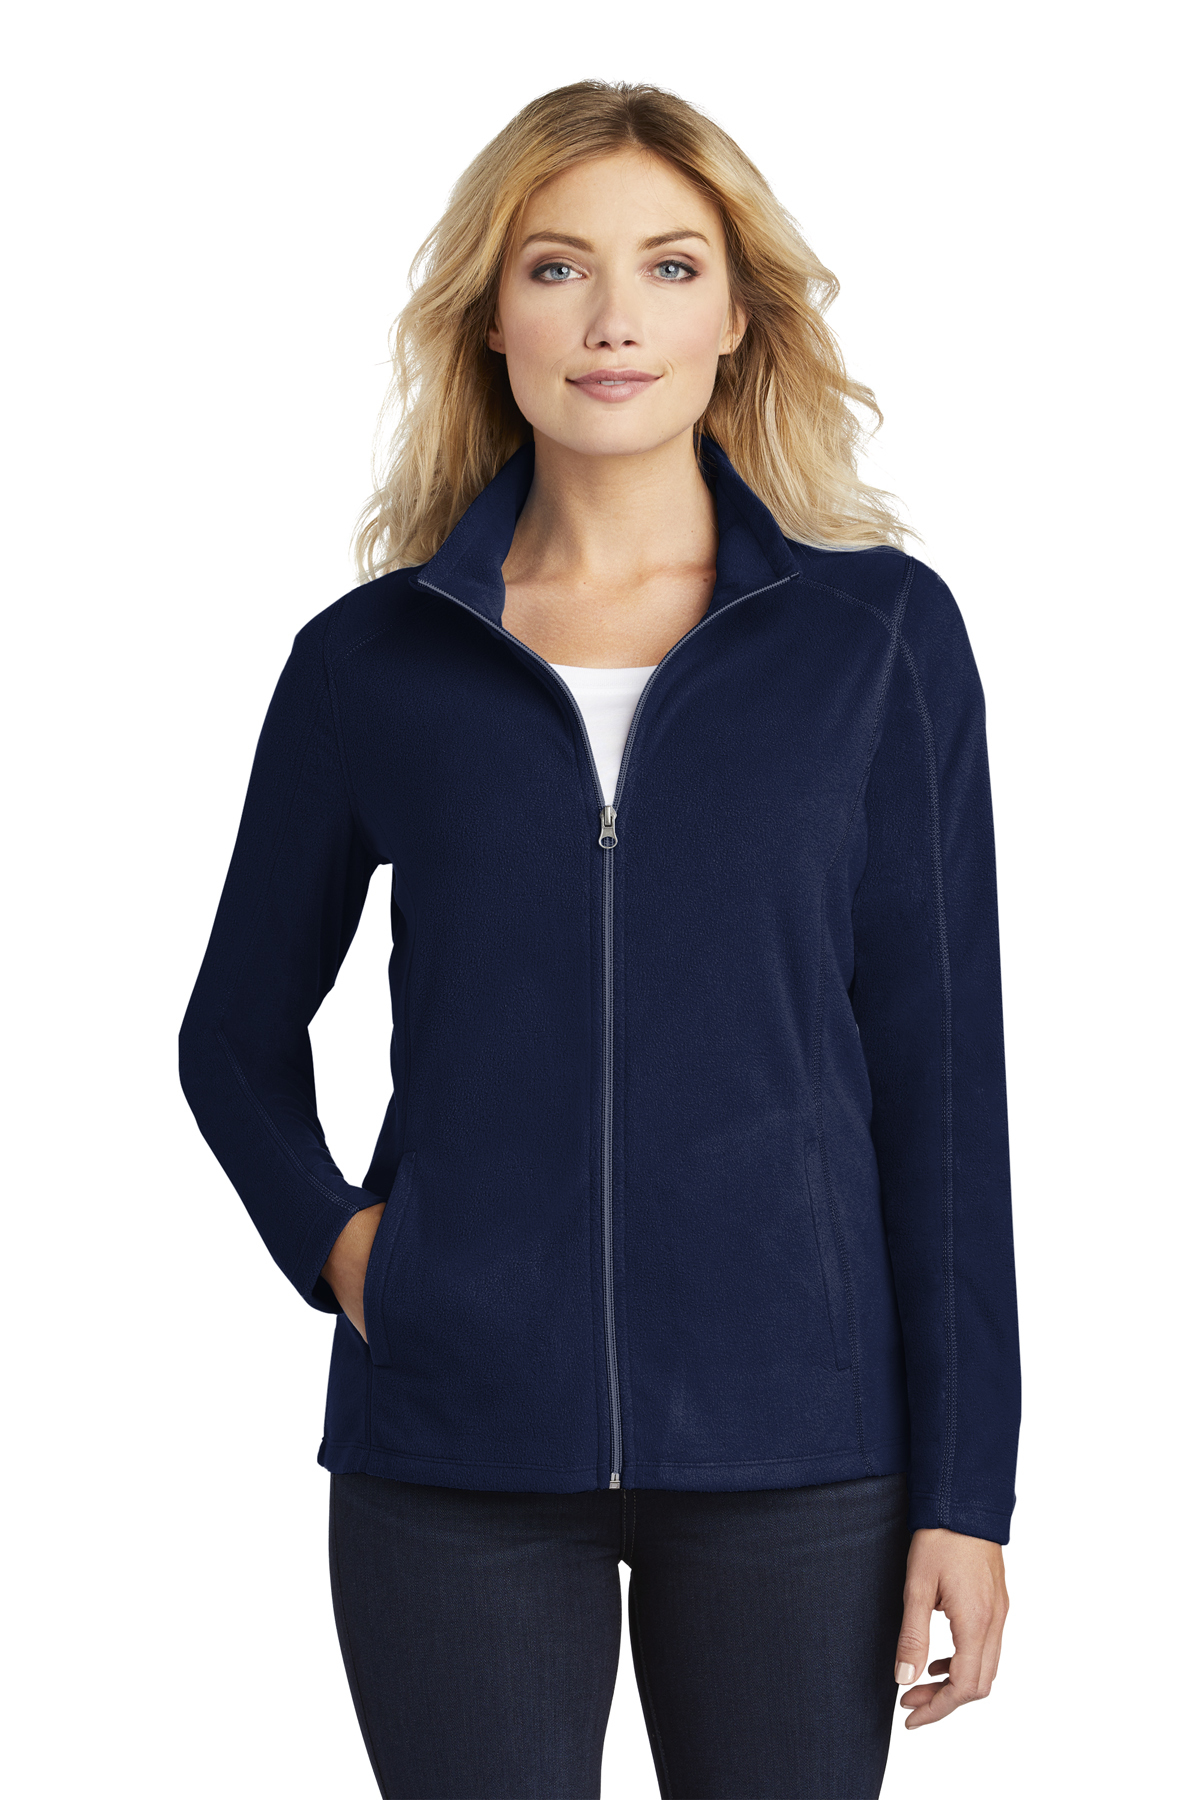 L235 - Port Authority Ladies Heather Microfleece Full-Zip Jacket